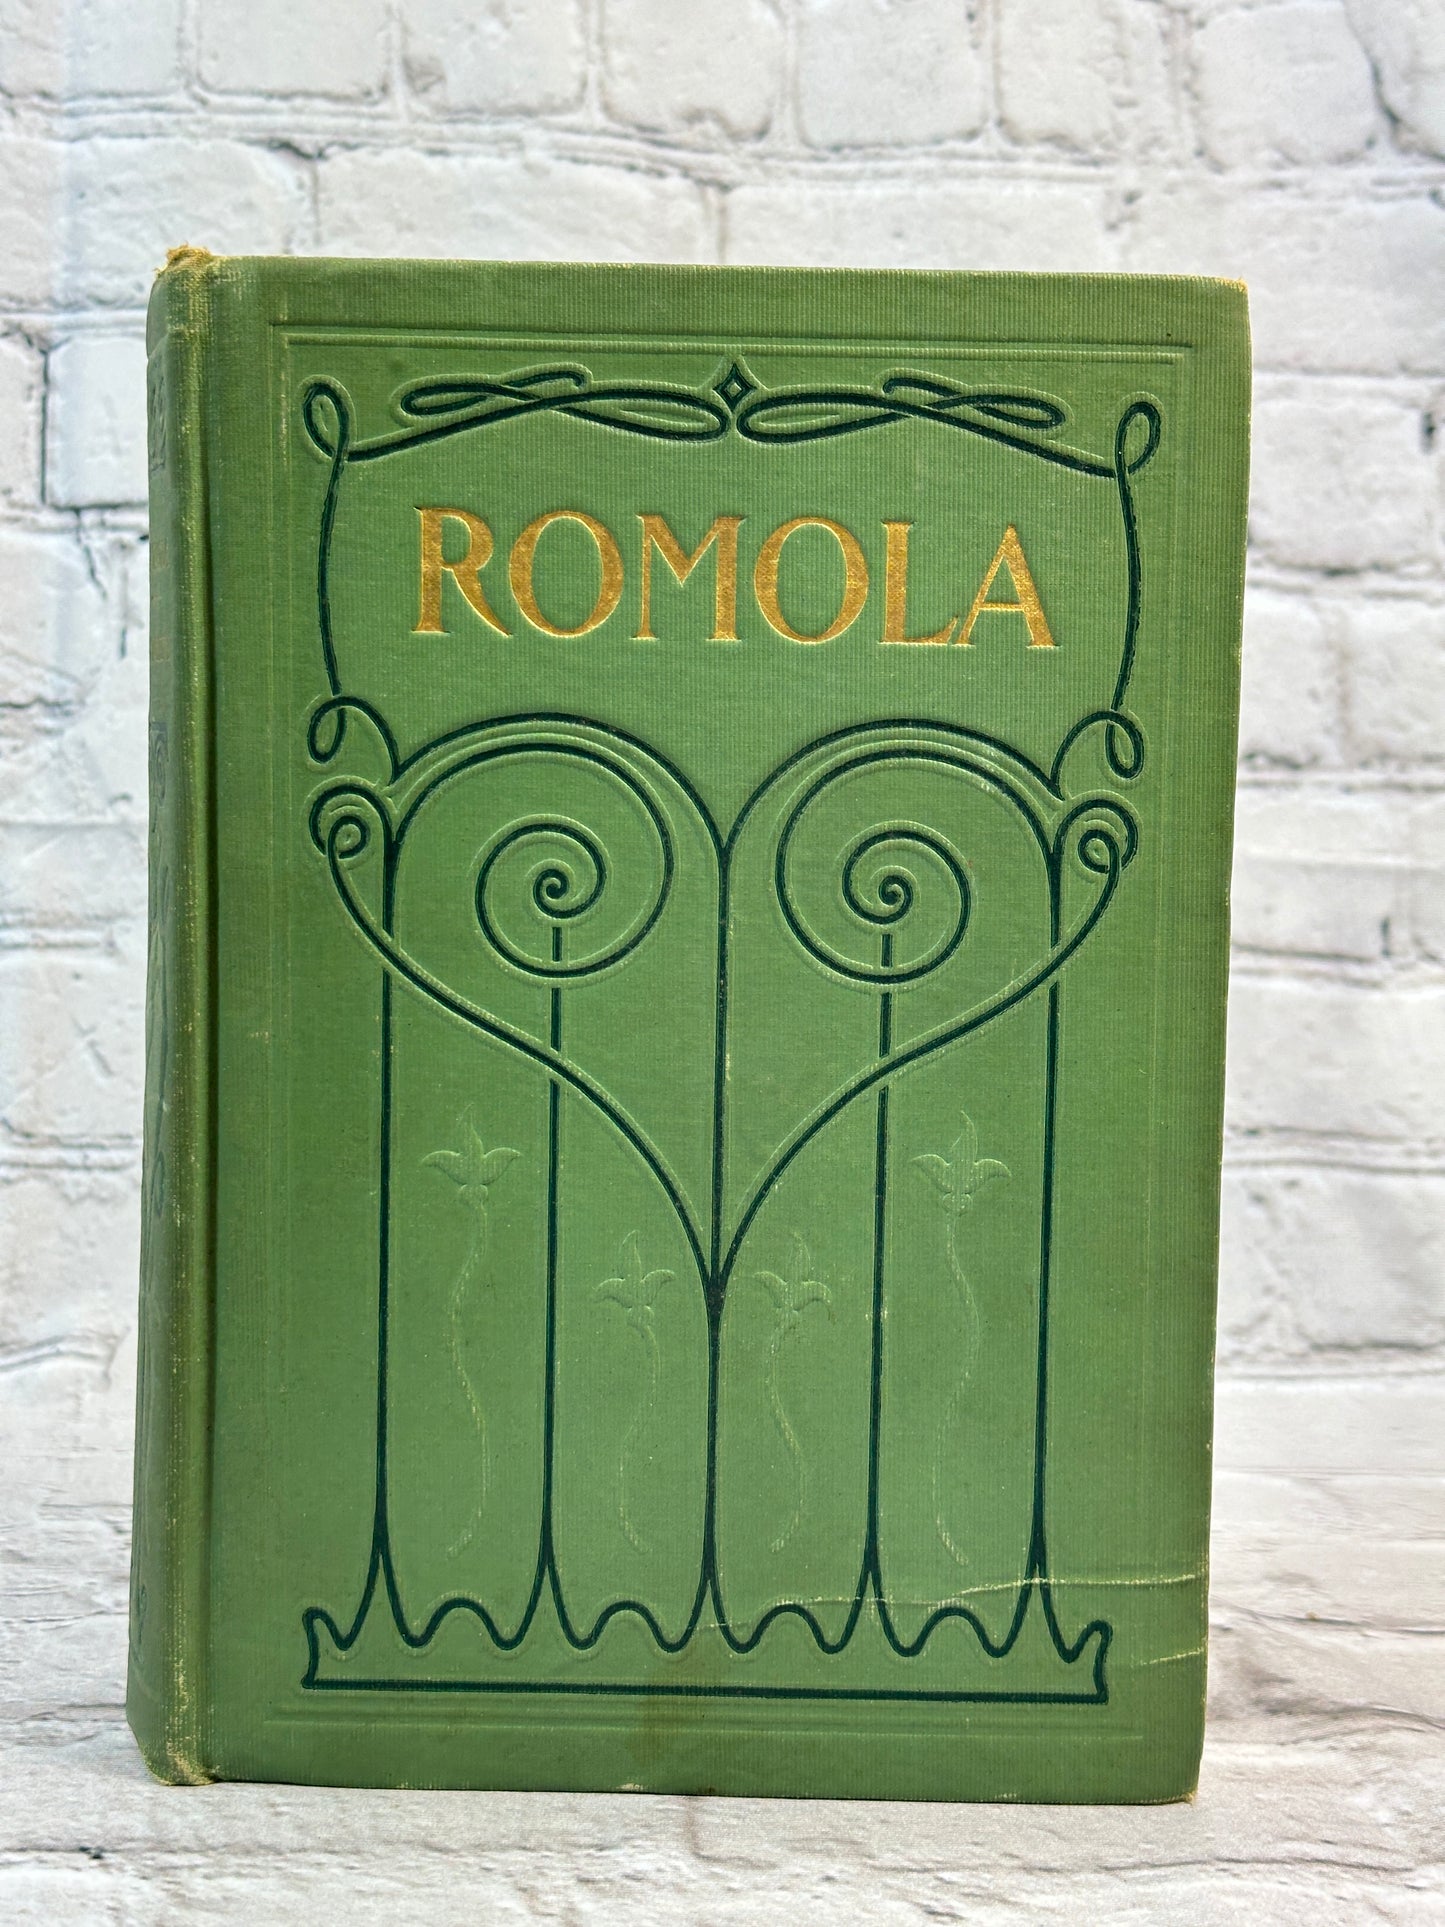 Romola by George Eliot  [Merrill & Baker]